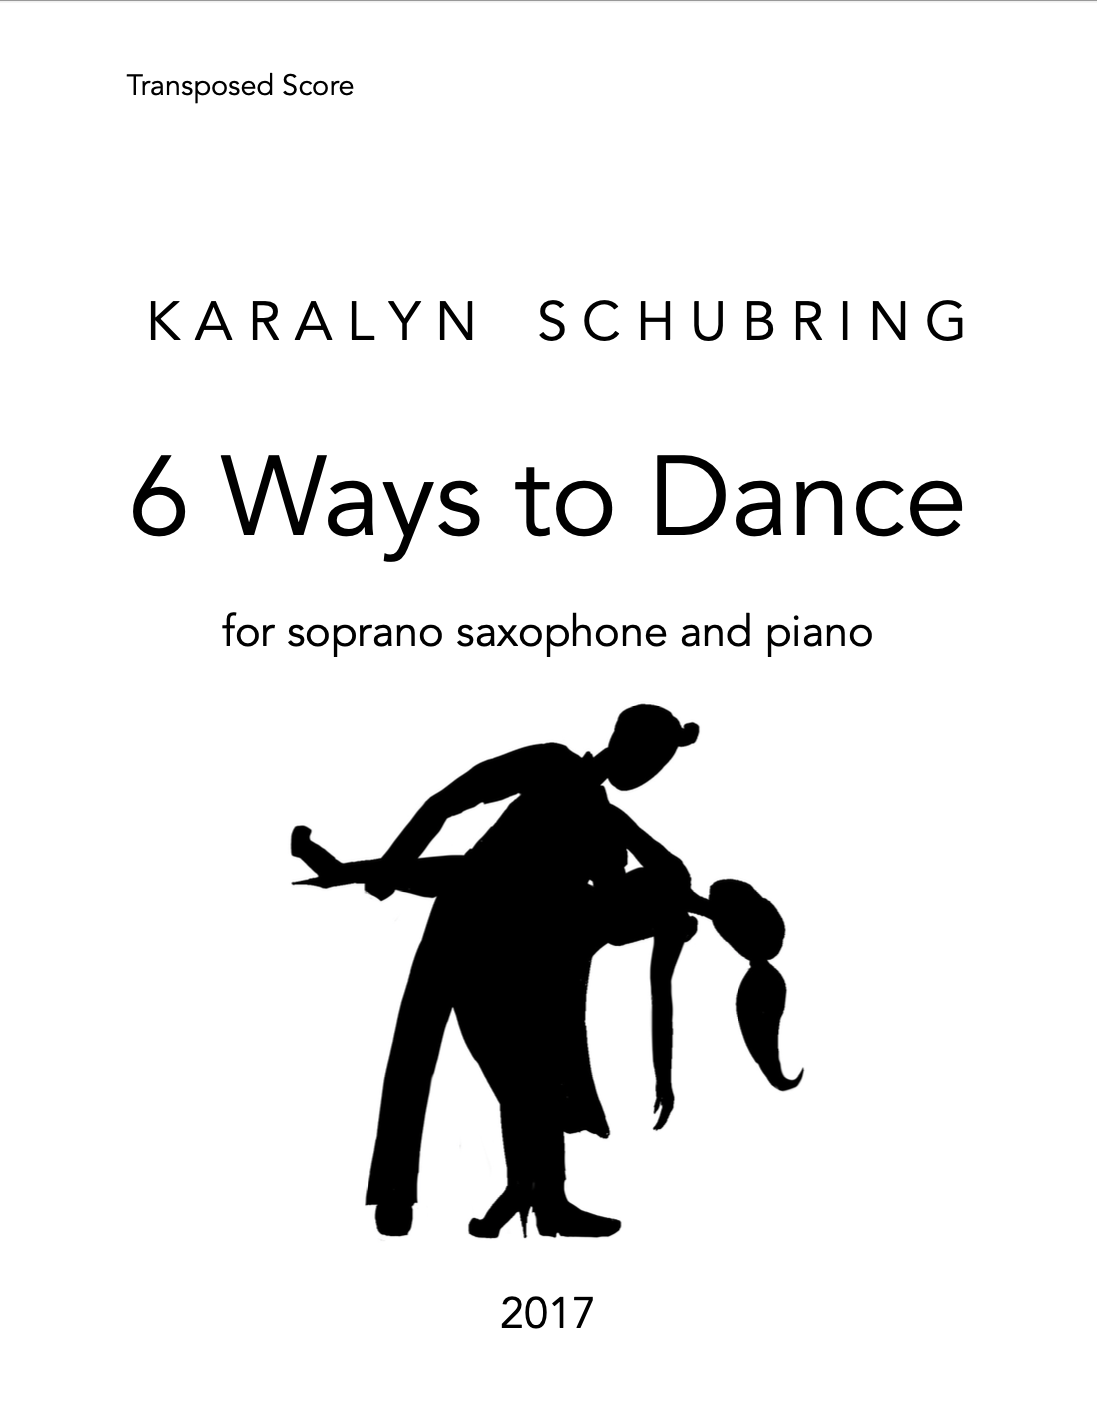 6 Ways To Dance by Karalyn Schubring